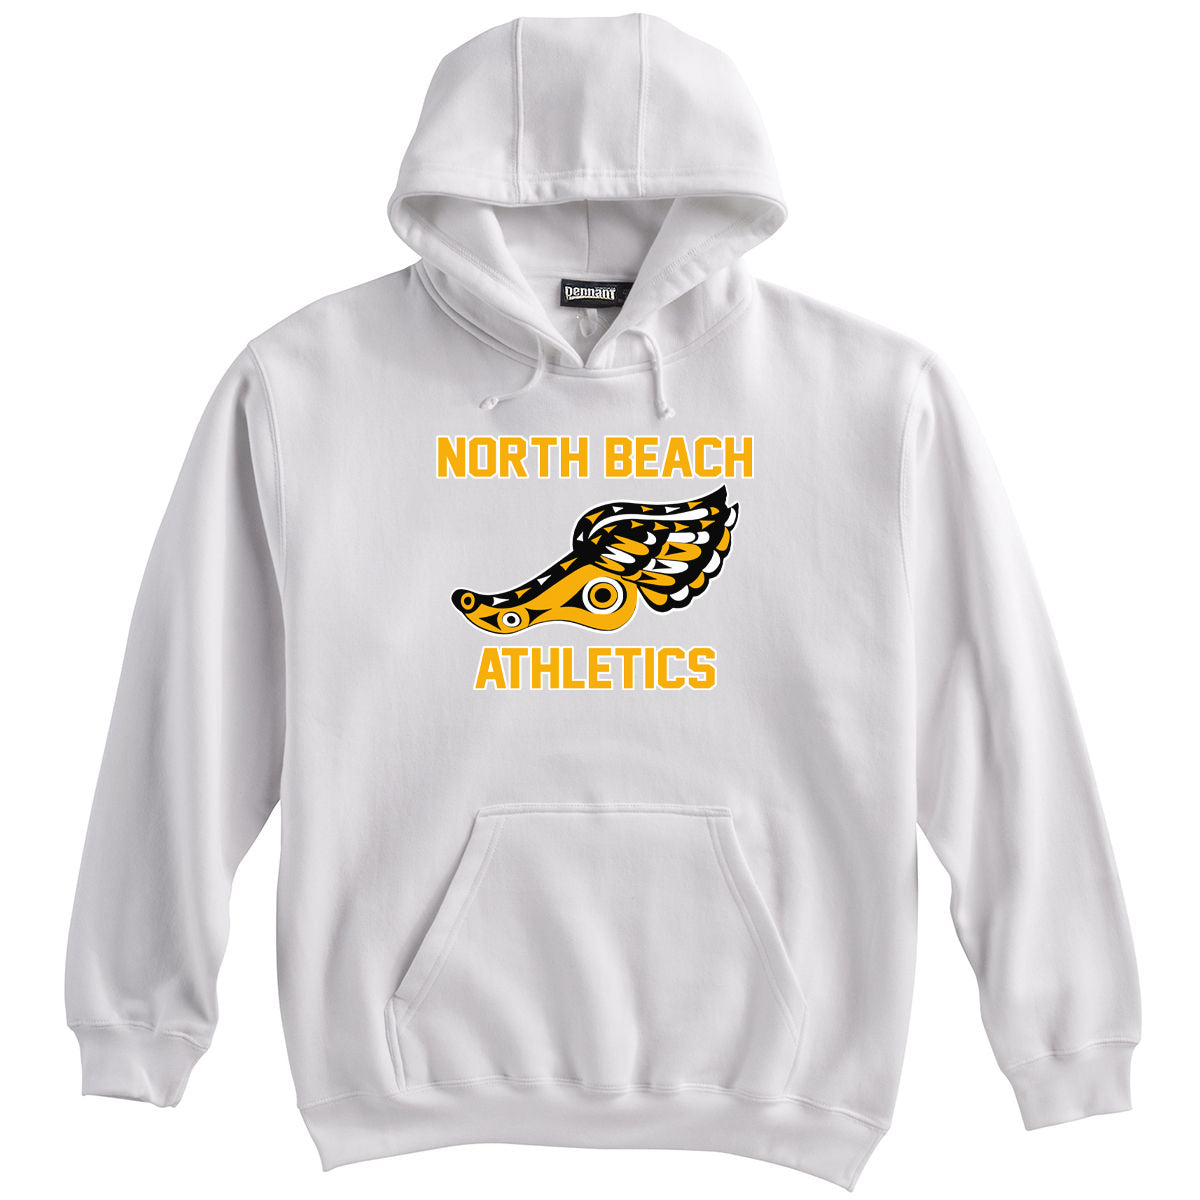 North Beach Athletics Sweatshirt